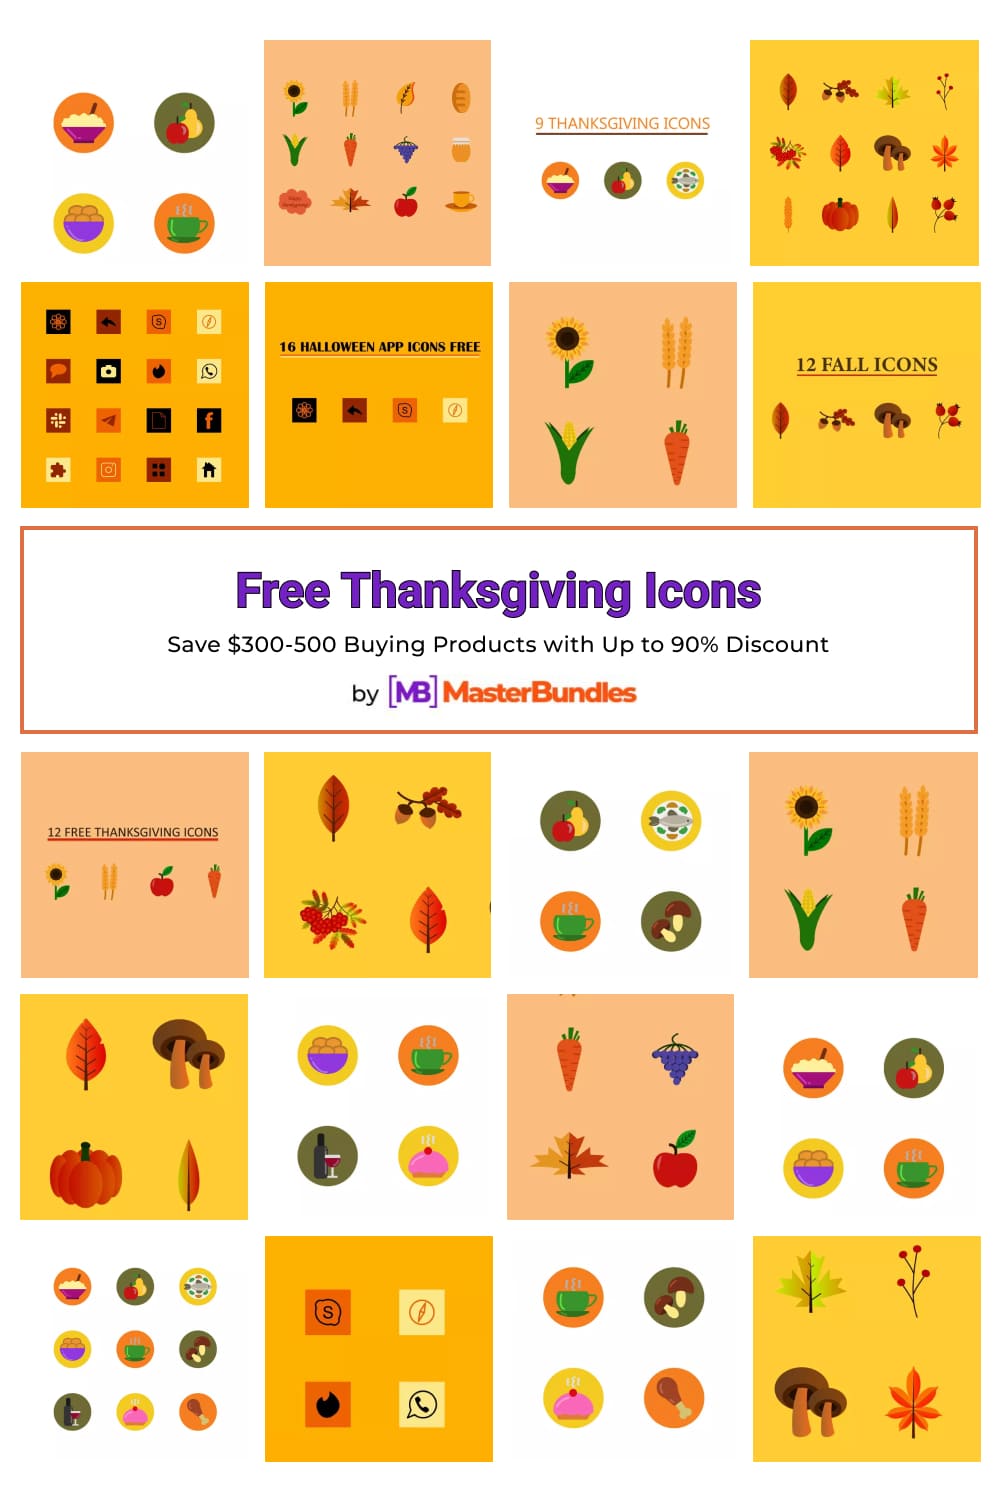 Free Thanksgiving Icons Pinterest image.